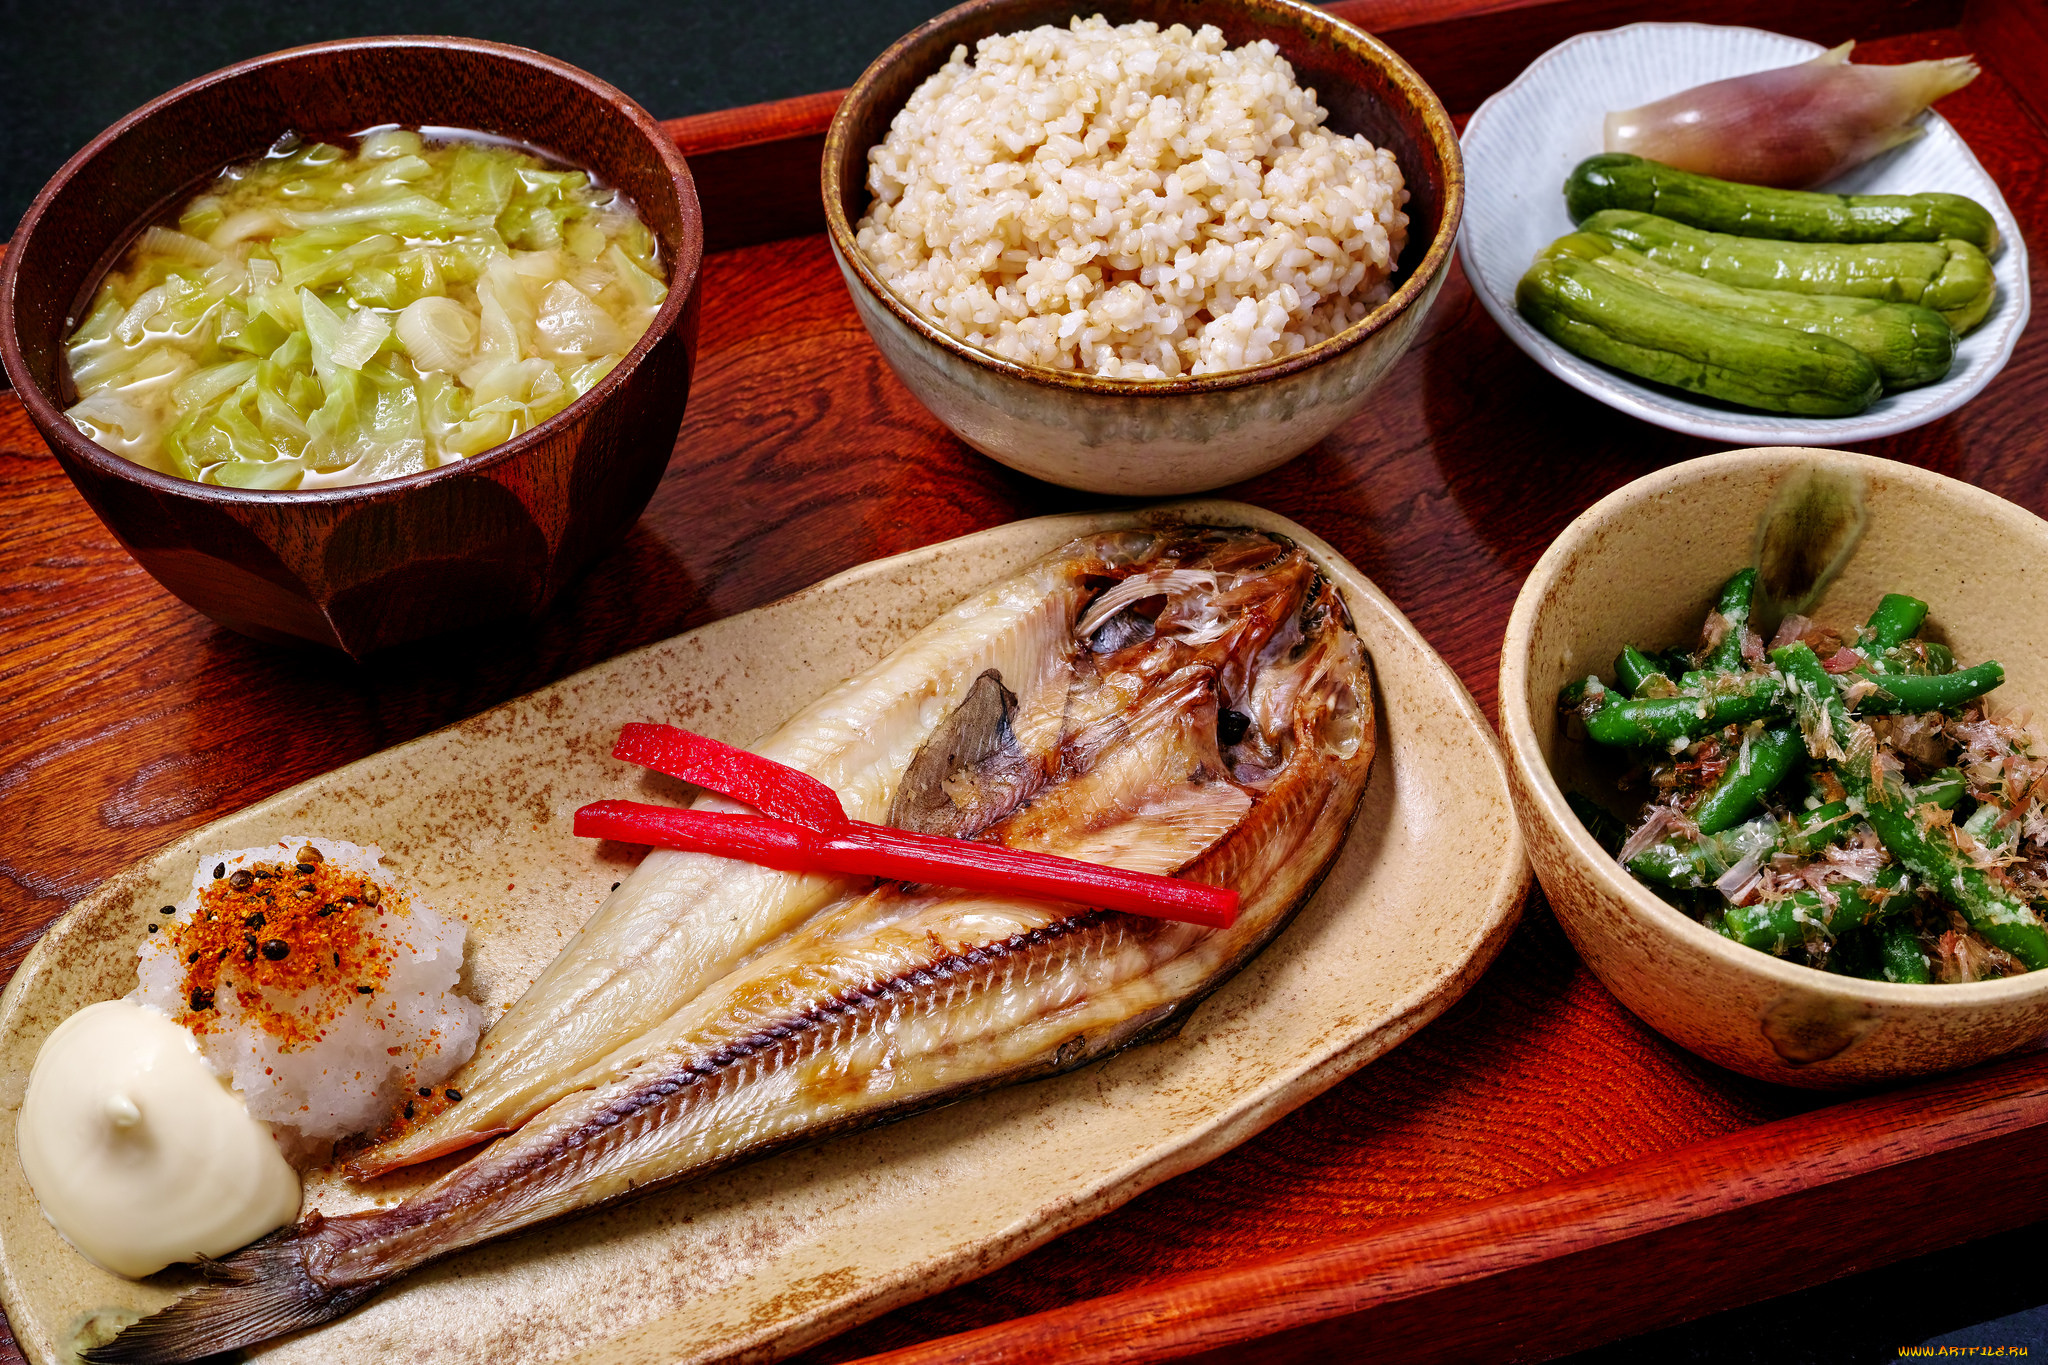 Рис рыба тюмень. Рыба с рисом и овощами. Рис рыба японская кухня. Рис с рыбой на обед. Картинка обеда рыба с рисом.